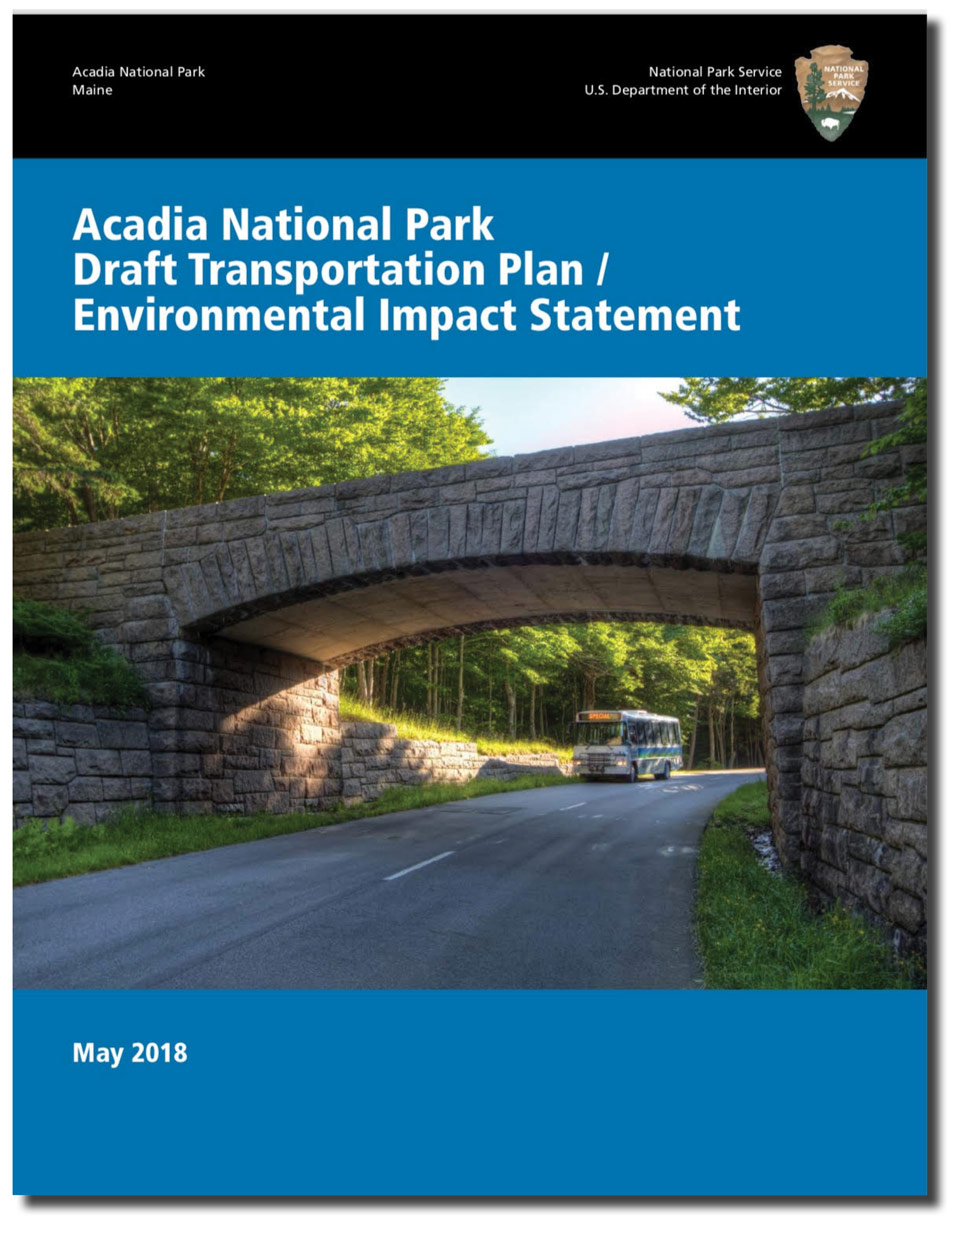 Cover of Draft Transportation Plan / Environmental Impact Statement